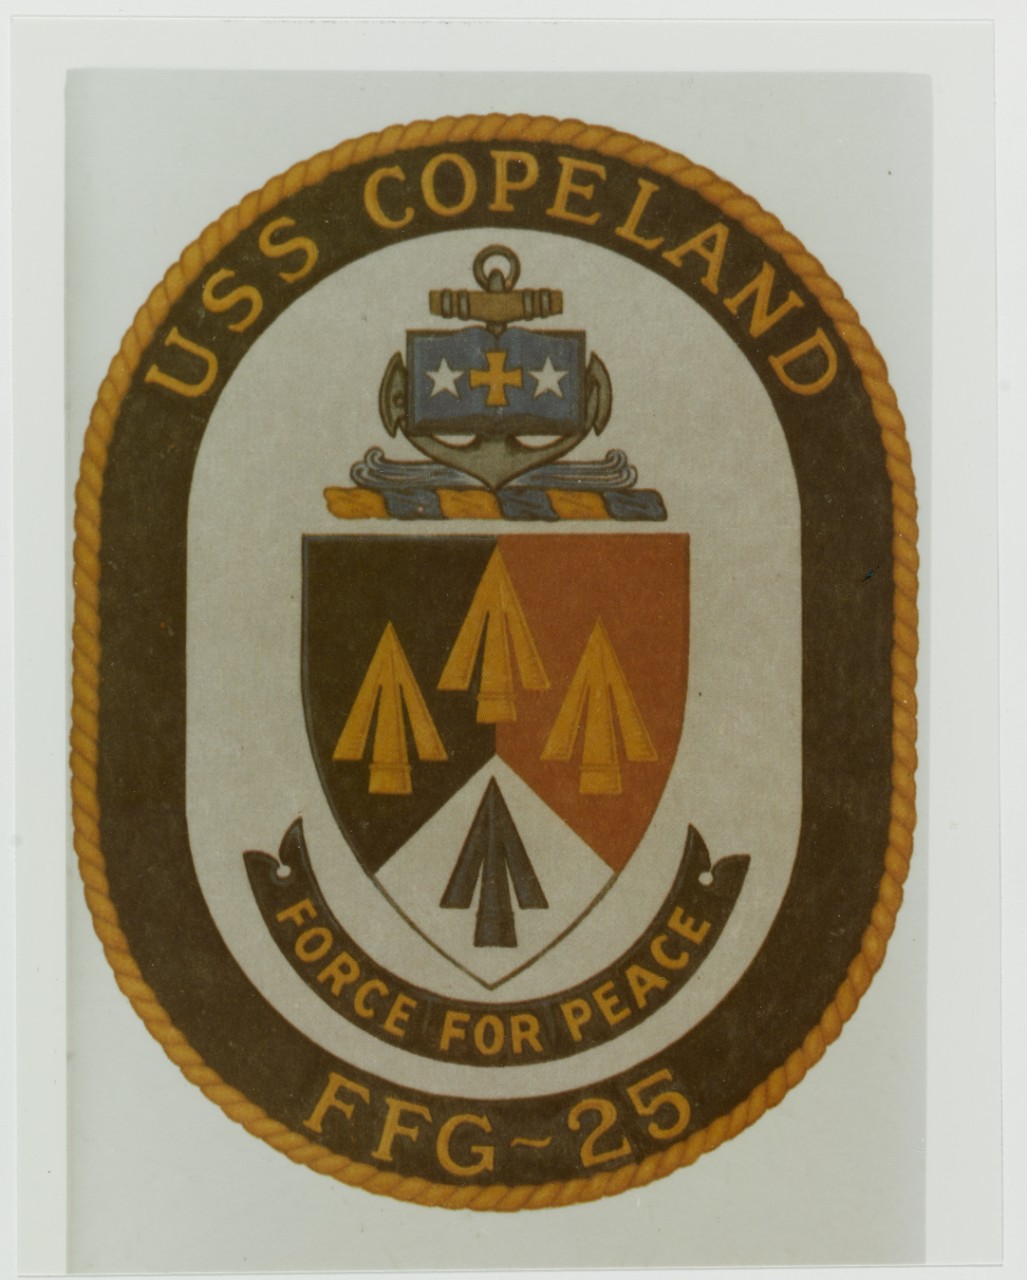 Insignia: USS COPELAND (FFG-25) "Force For Peace" Emblem circa 1981-1982